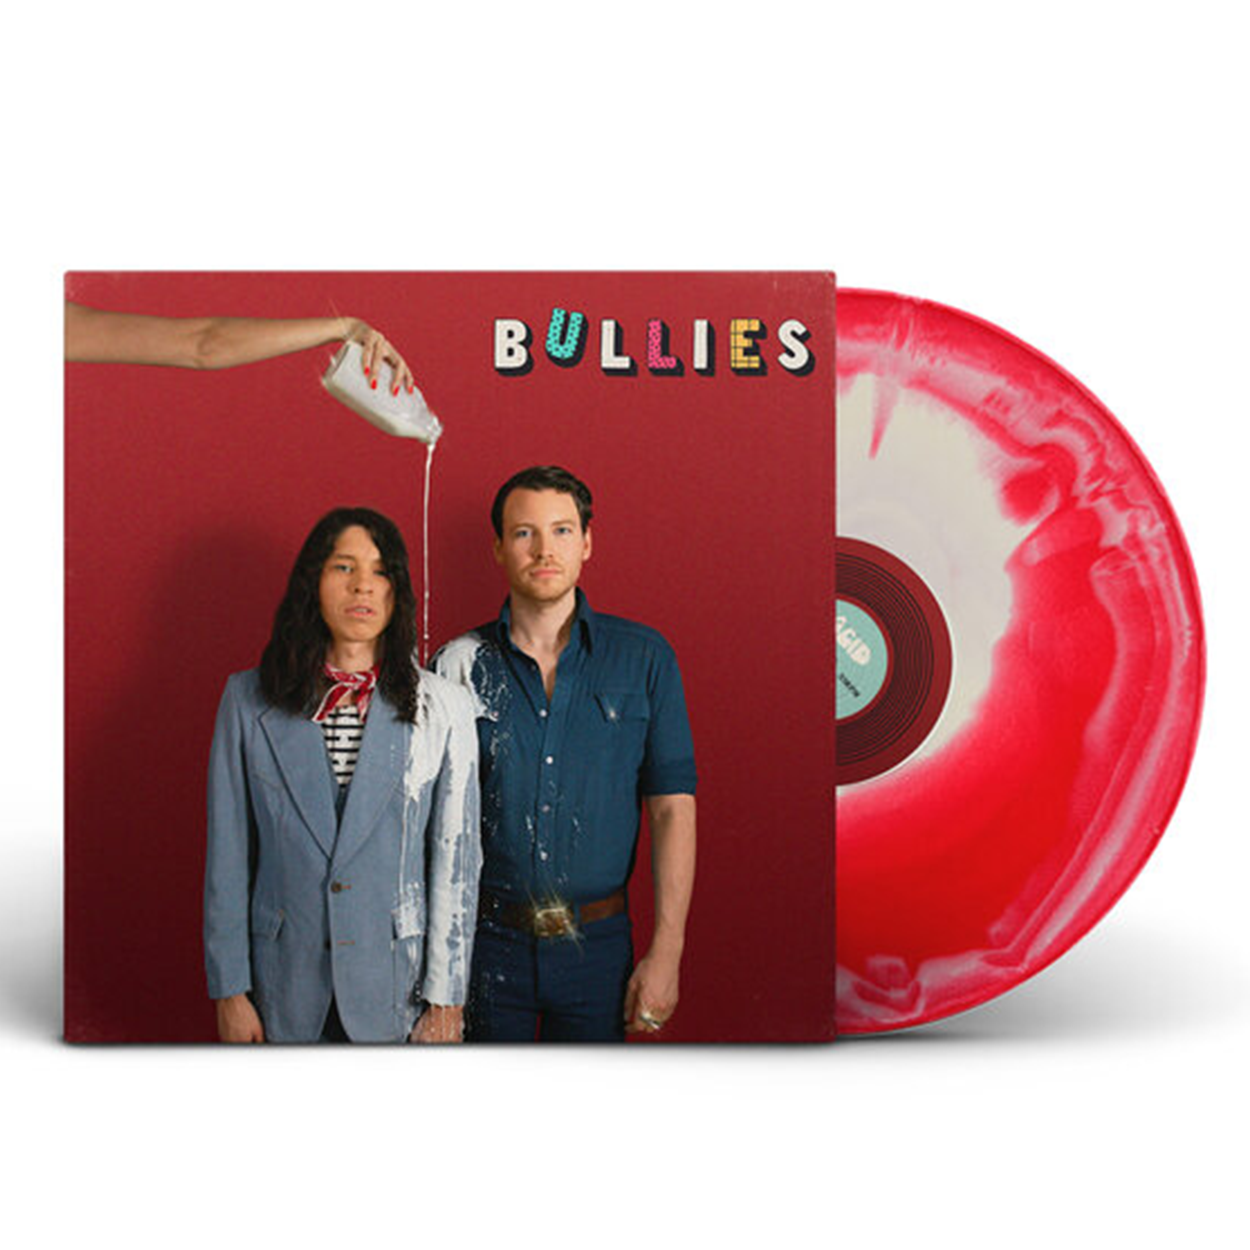 Bullies - 12" Gatefold Colored Vinyl